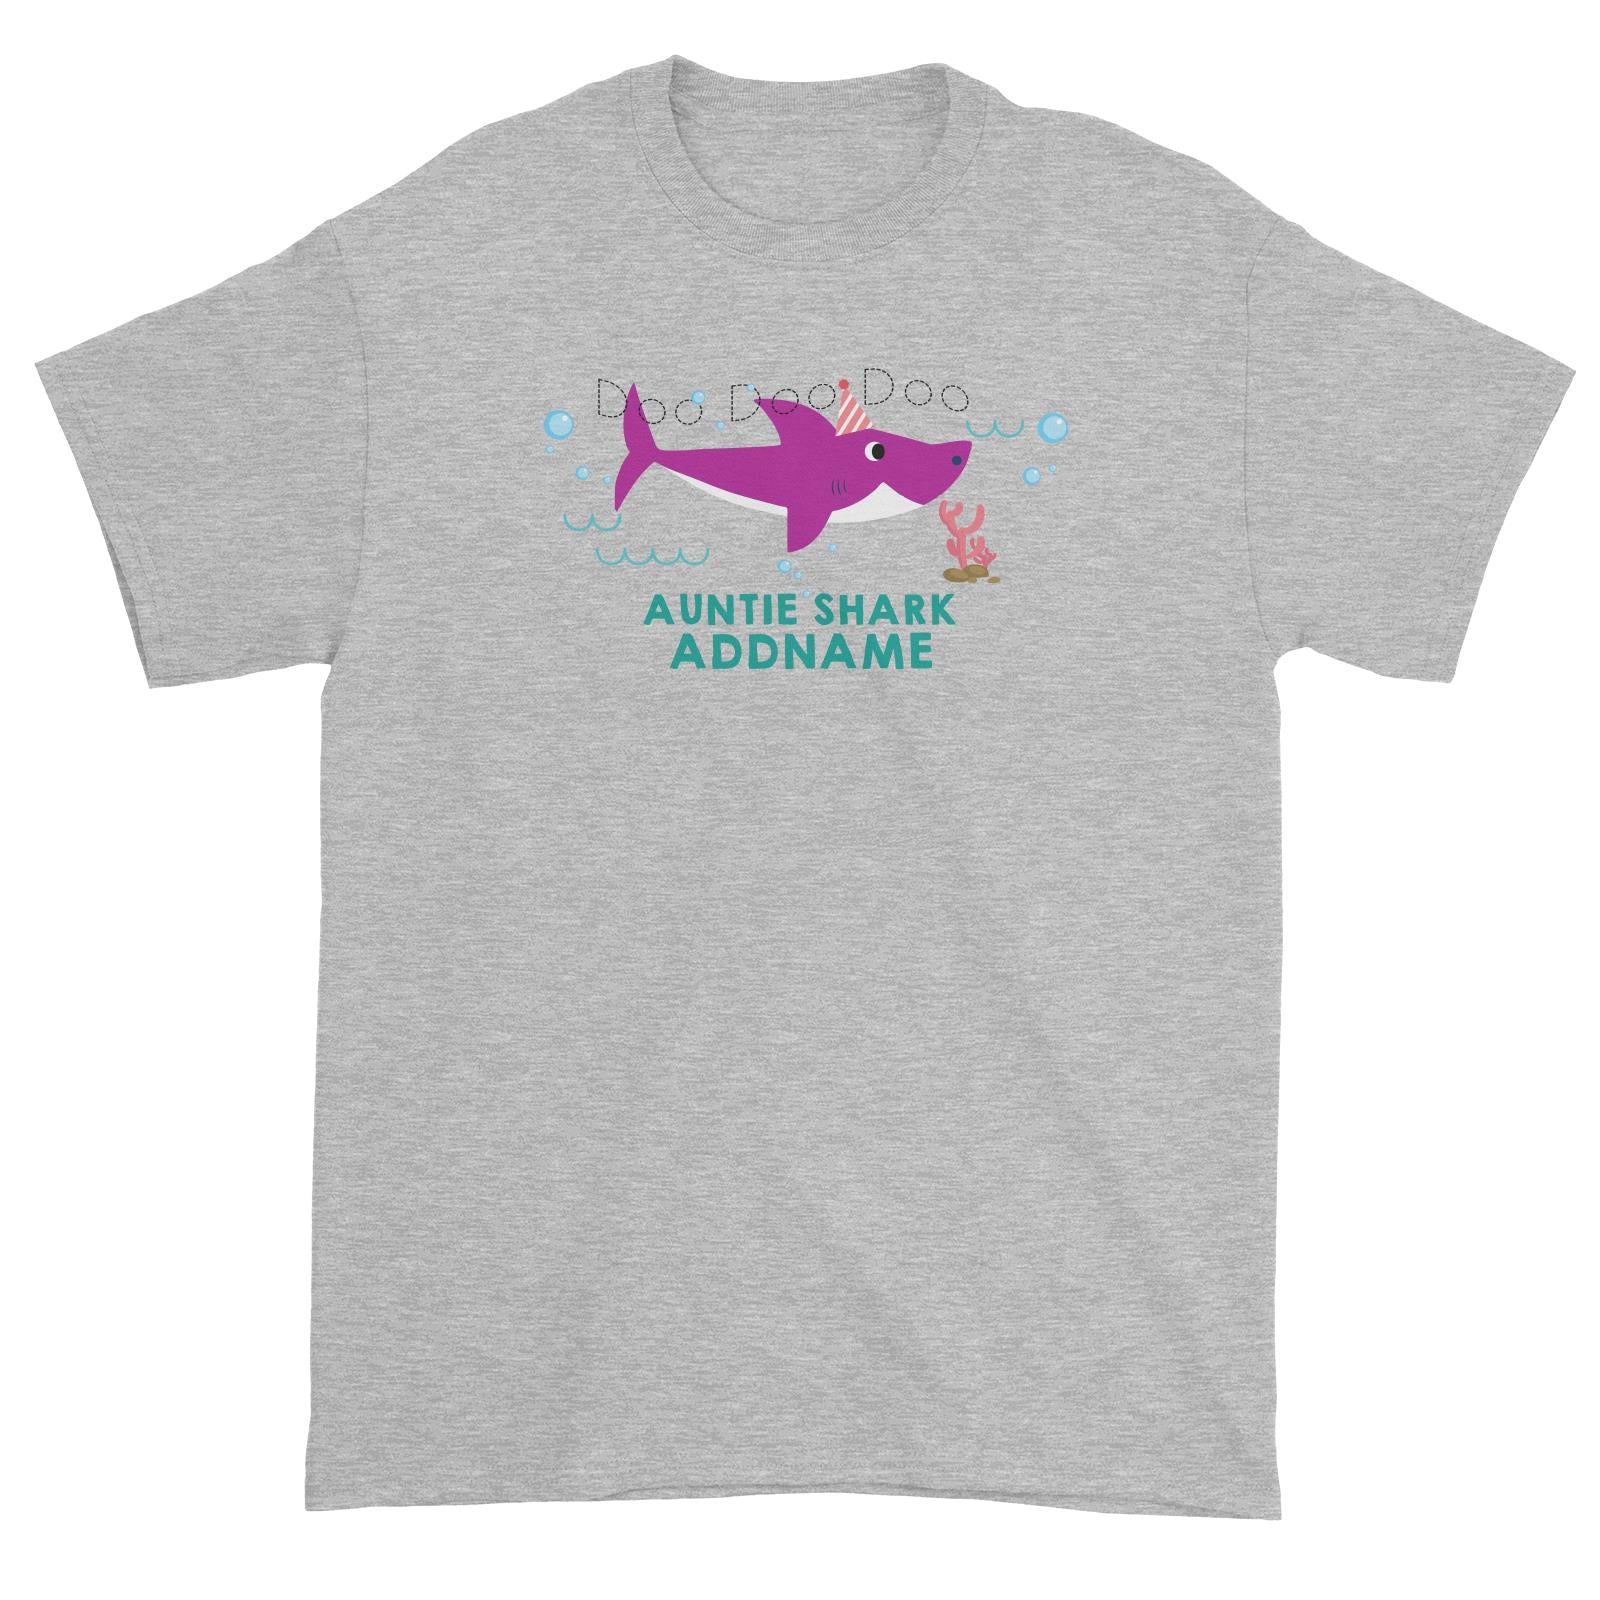 Auntie Shark Birthday Theme Addname Unisex T-Shirt